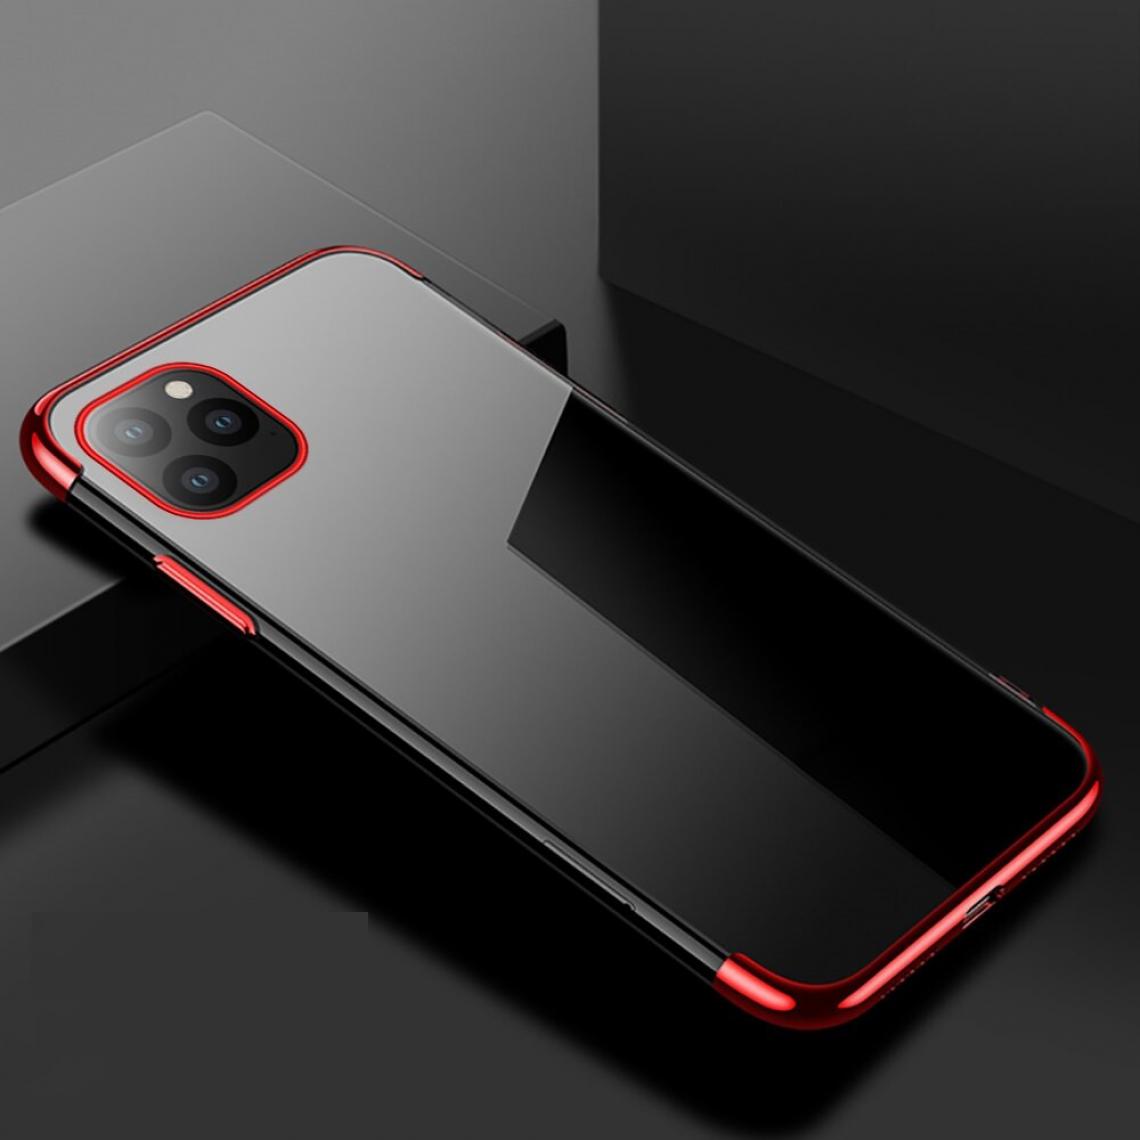 Shot - Coque Silicone Bord pour "IPHONE 11 Pro Max" APPLE Bumper Fine Transparente (ROUGE) - Coque, étui smartphone